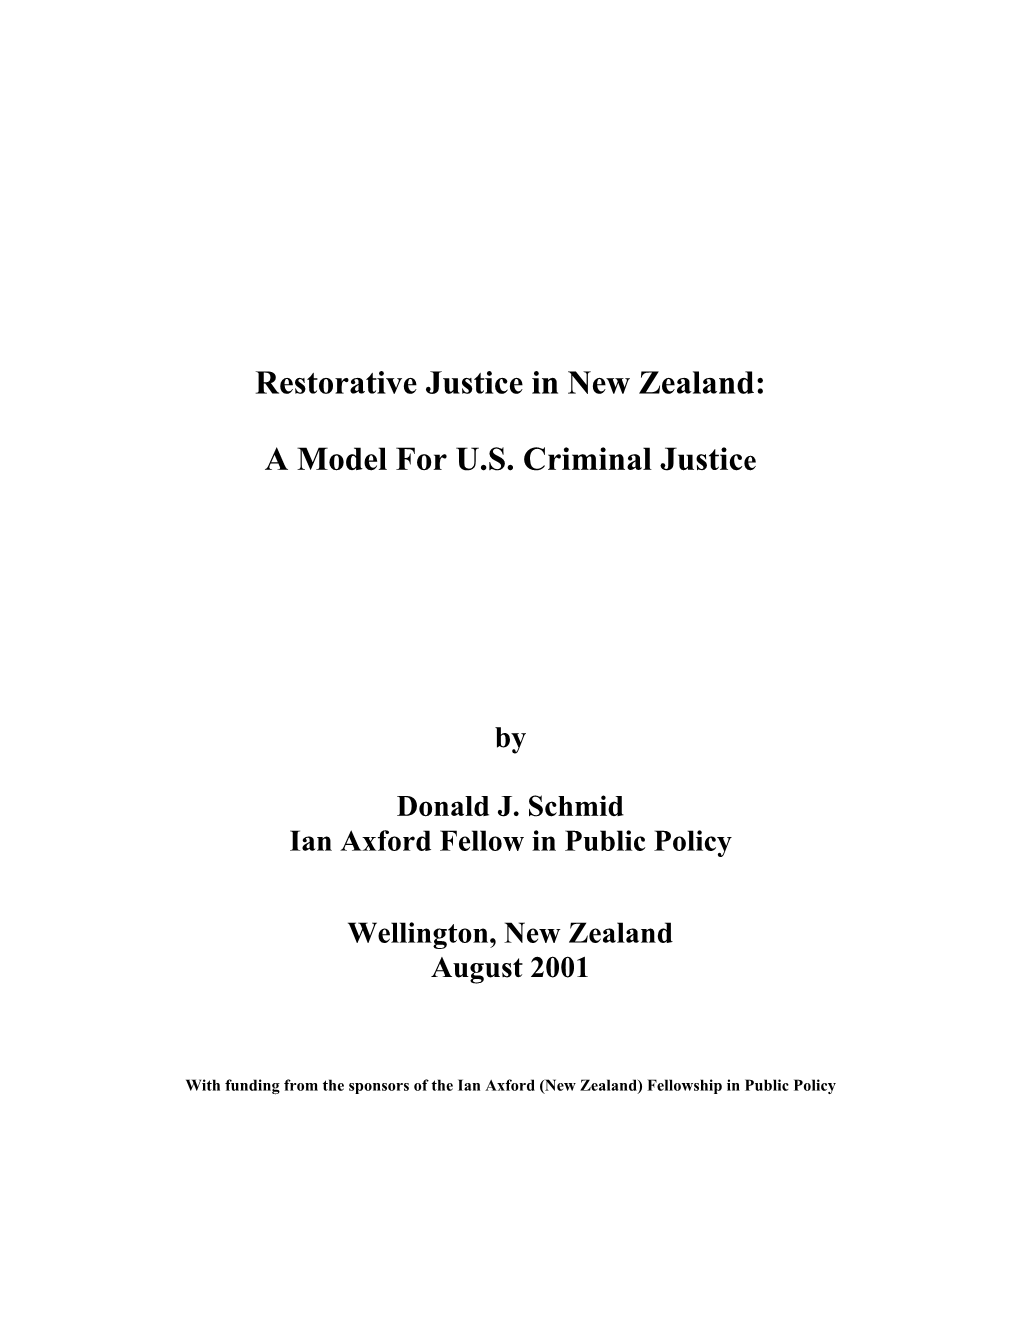 Restorative Justice in New Zealand: a Model for U.S. Criminal Justice